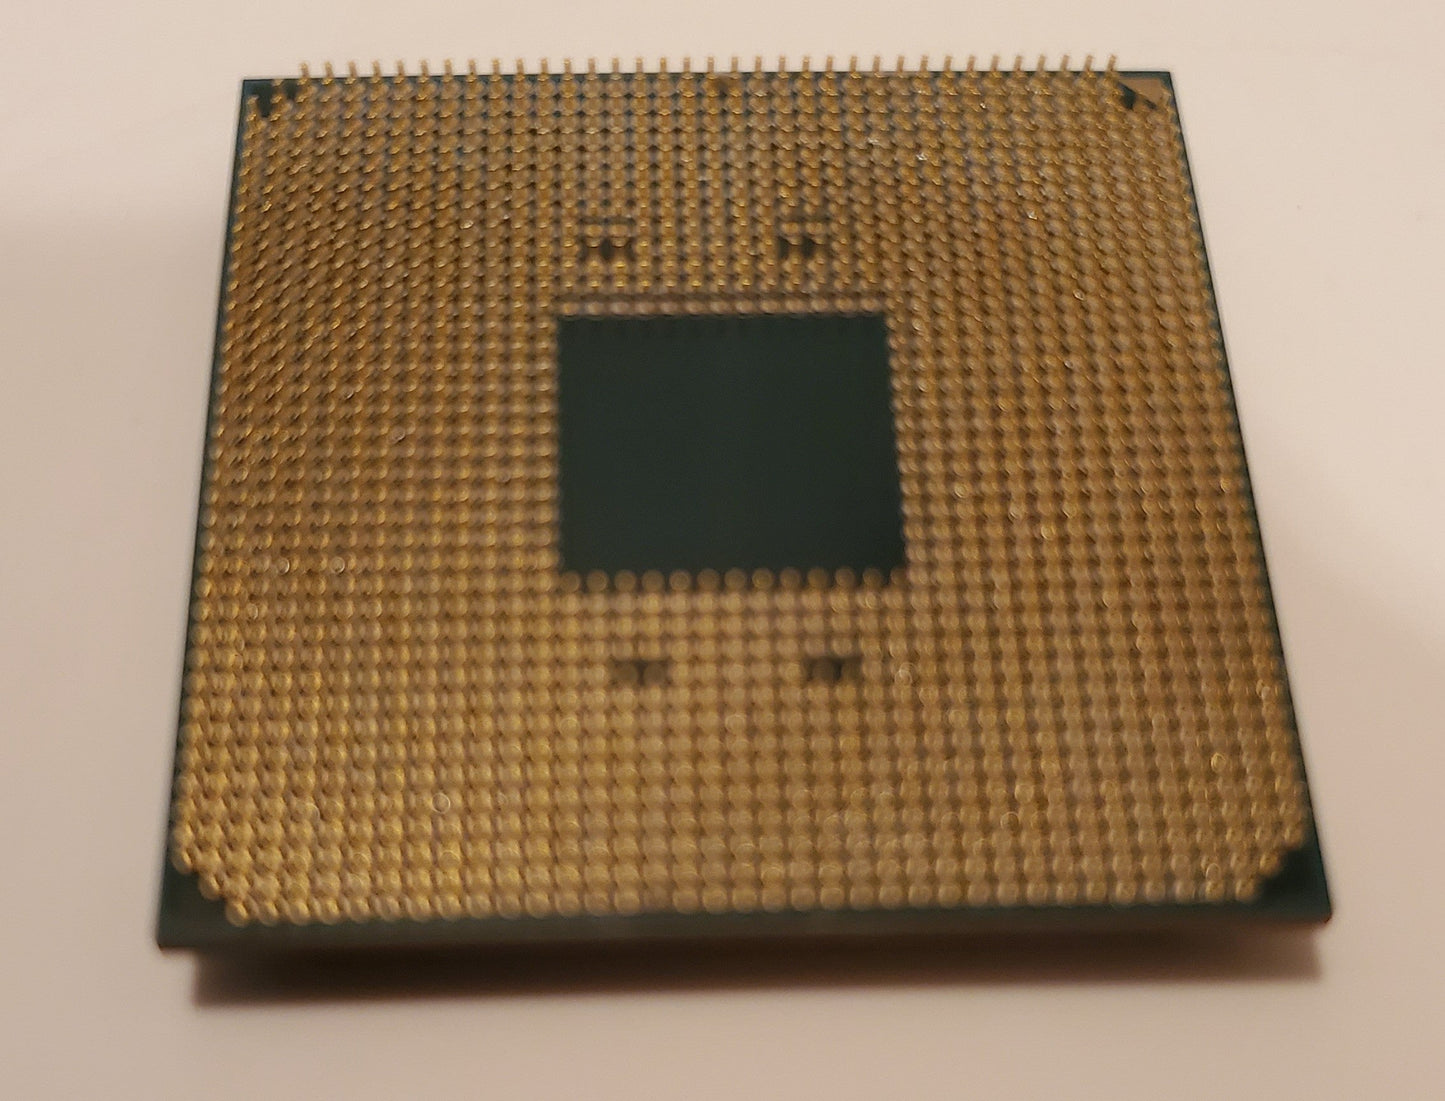 AMD Ryzen 7 3700x